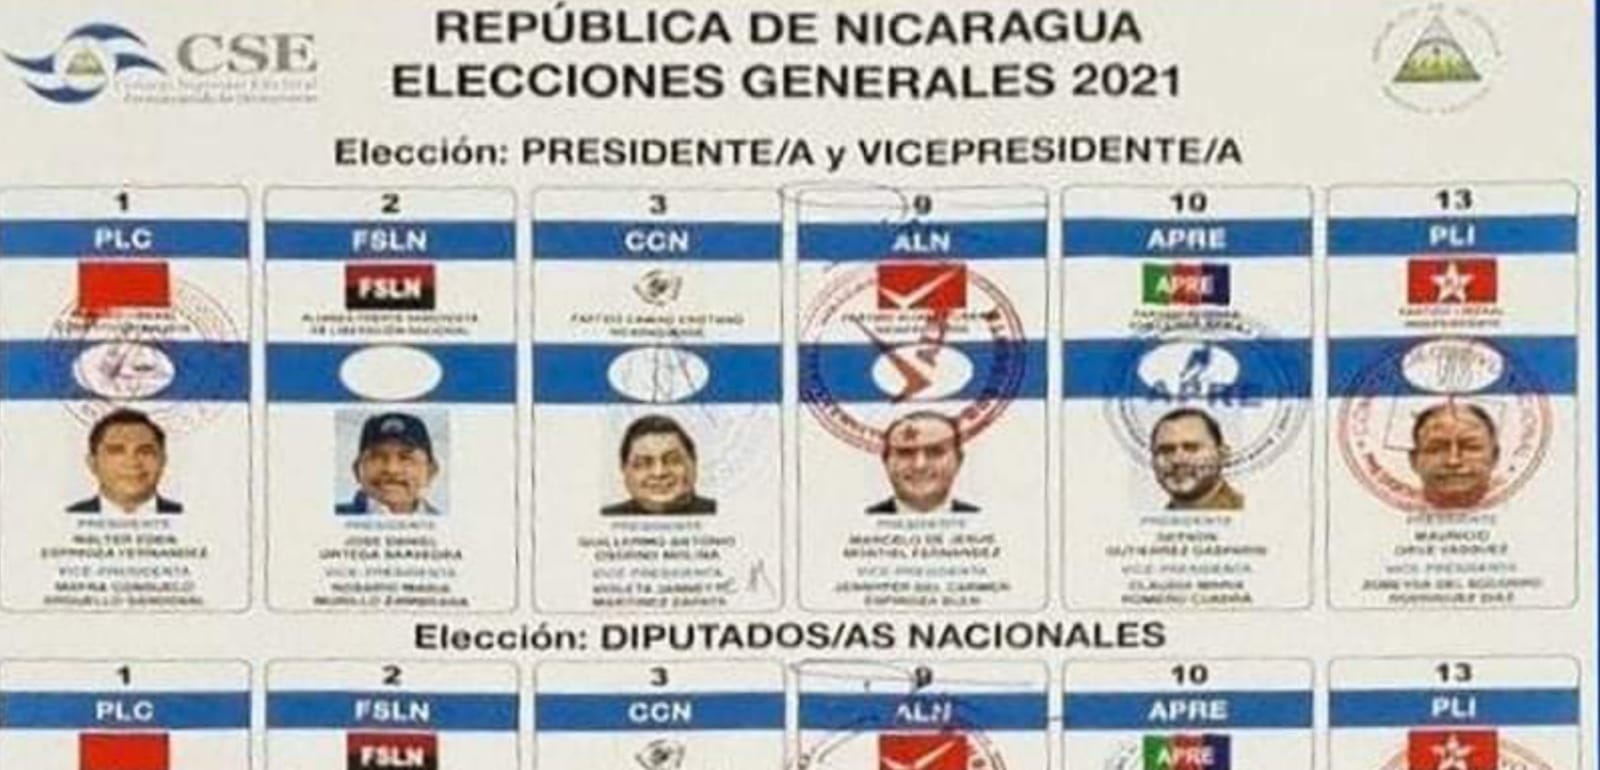 Magistrado asegura que boleta única agilizará votaciones Managua. Prensa Latina